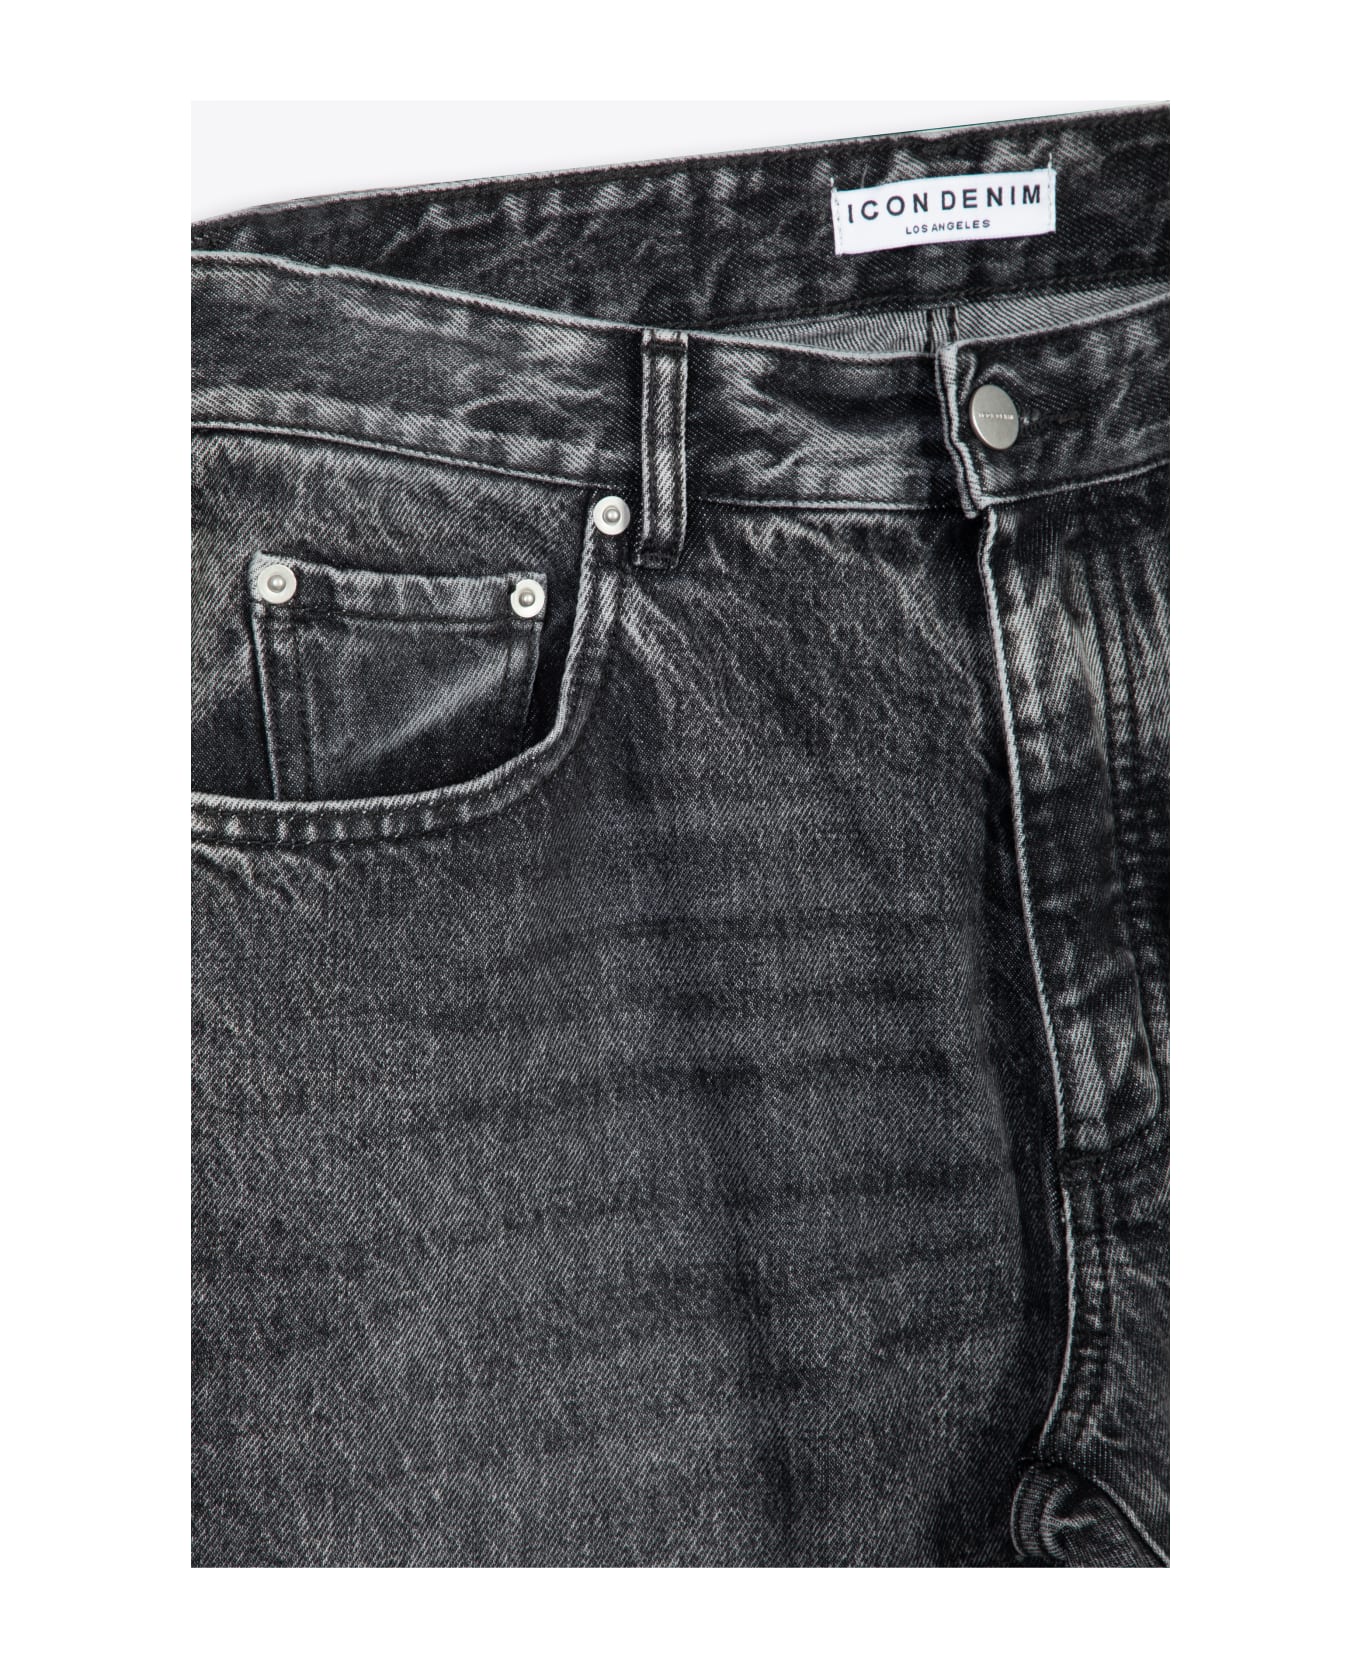 Icon Denim Man Jeans Five pockets faded black jeans - Kanye - Denim nero